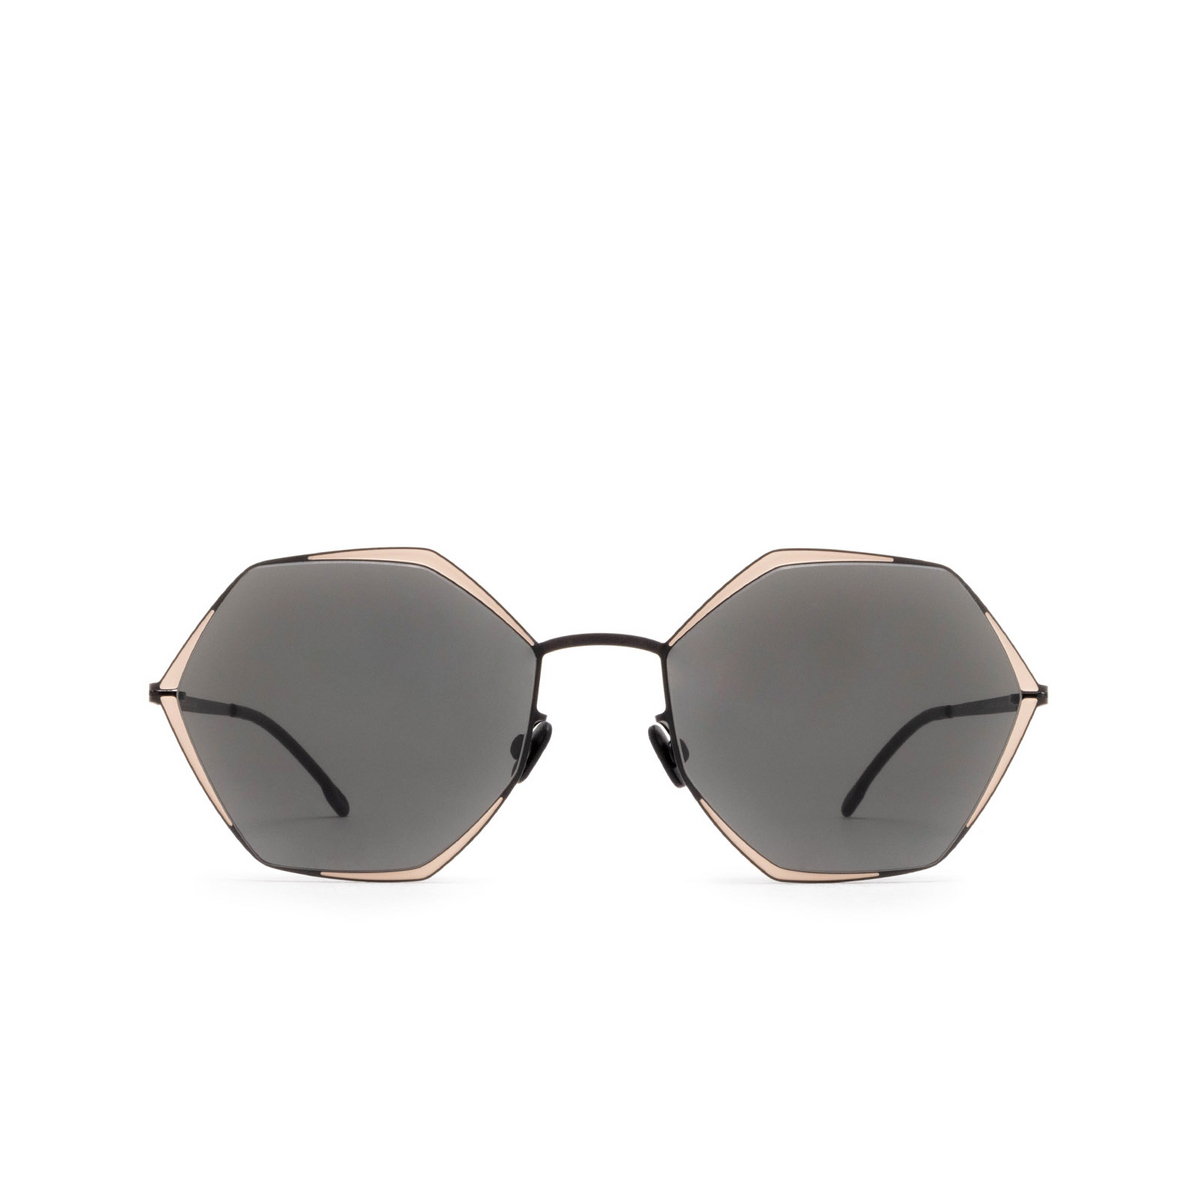 Mykita ALESSIA SUN Sunglasses 404 Black/Sand - front view